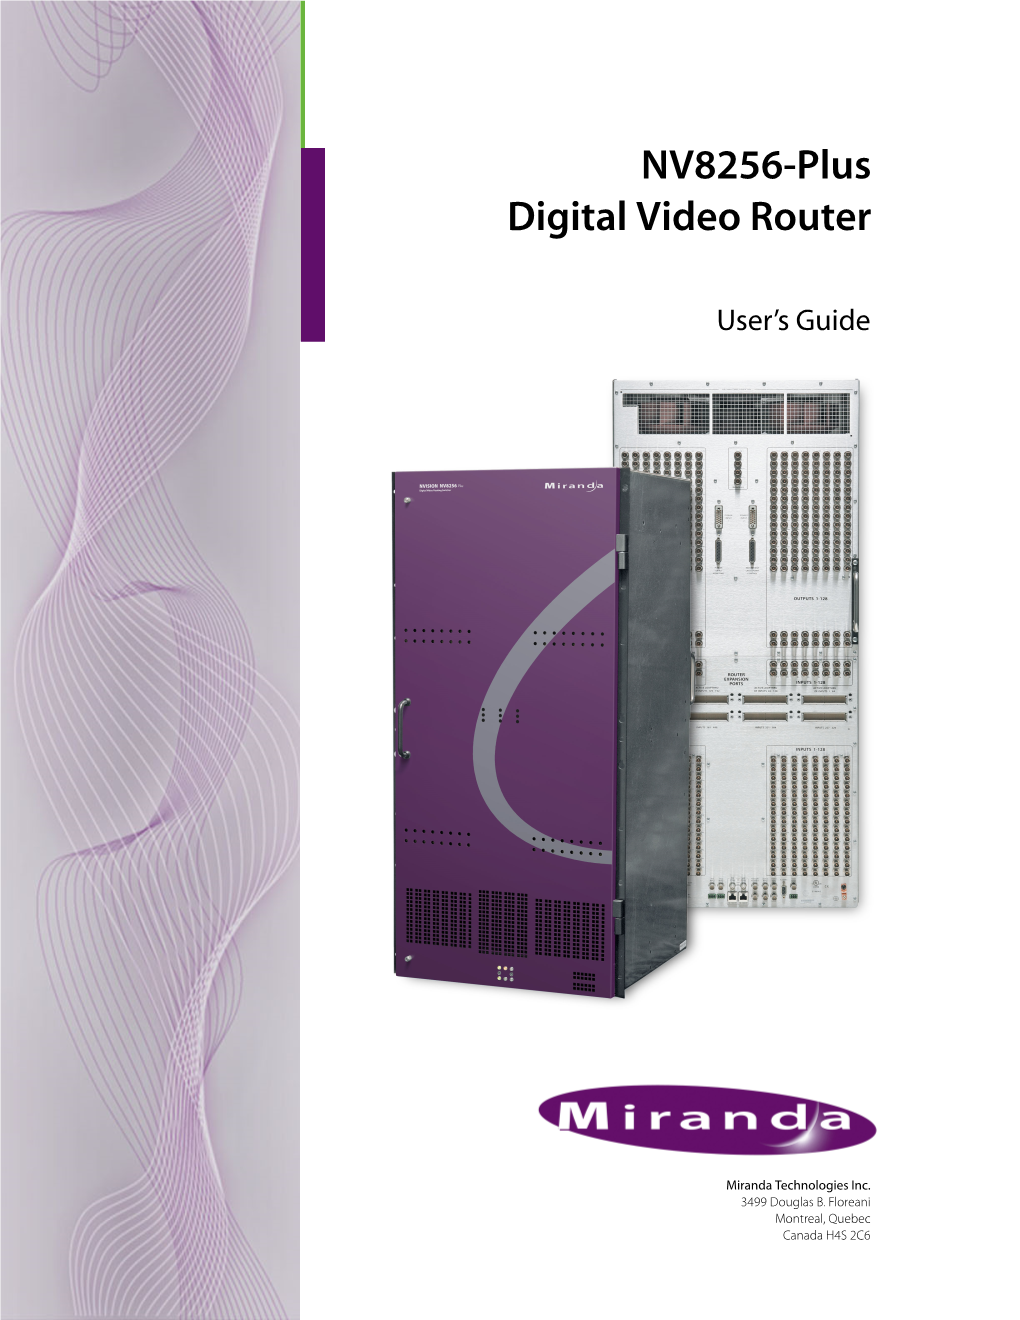 NV8256-Plus Digital Video Router